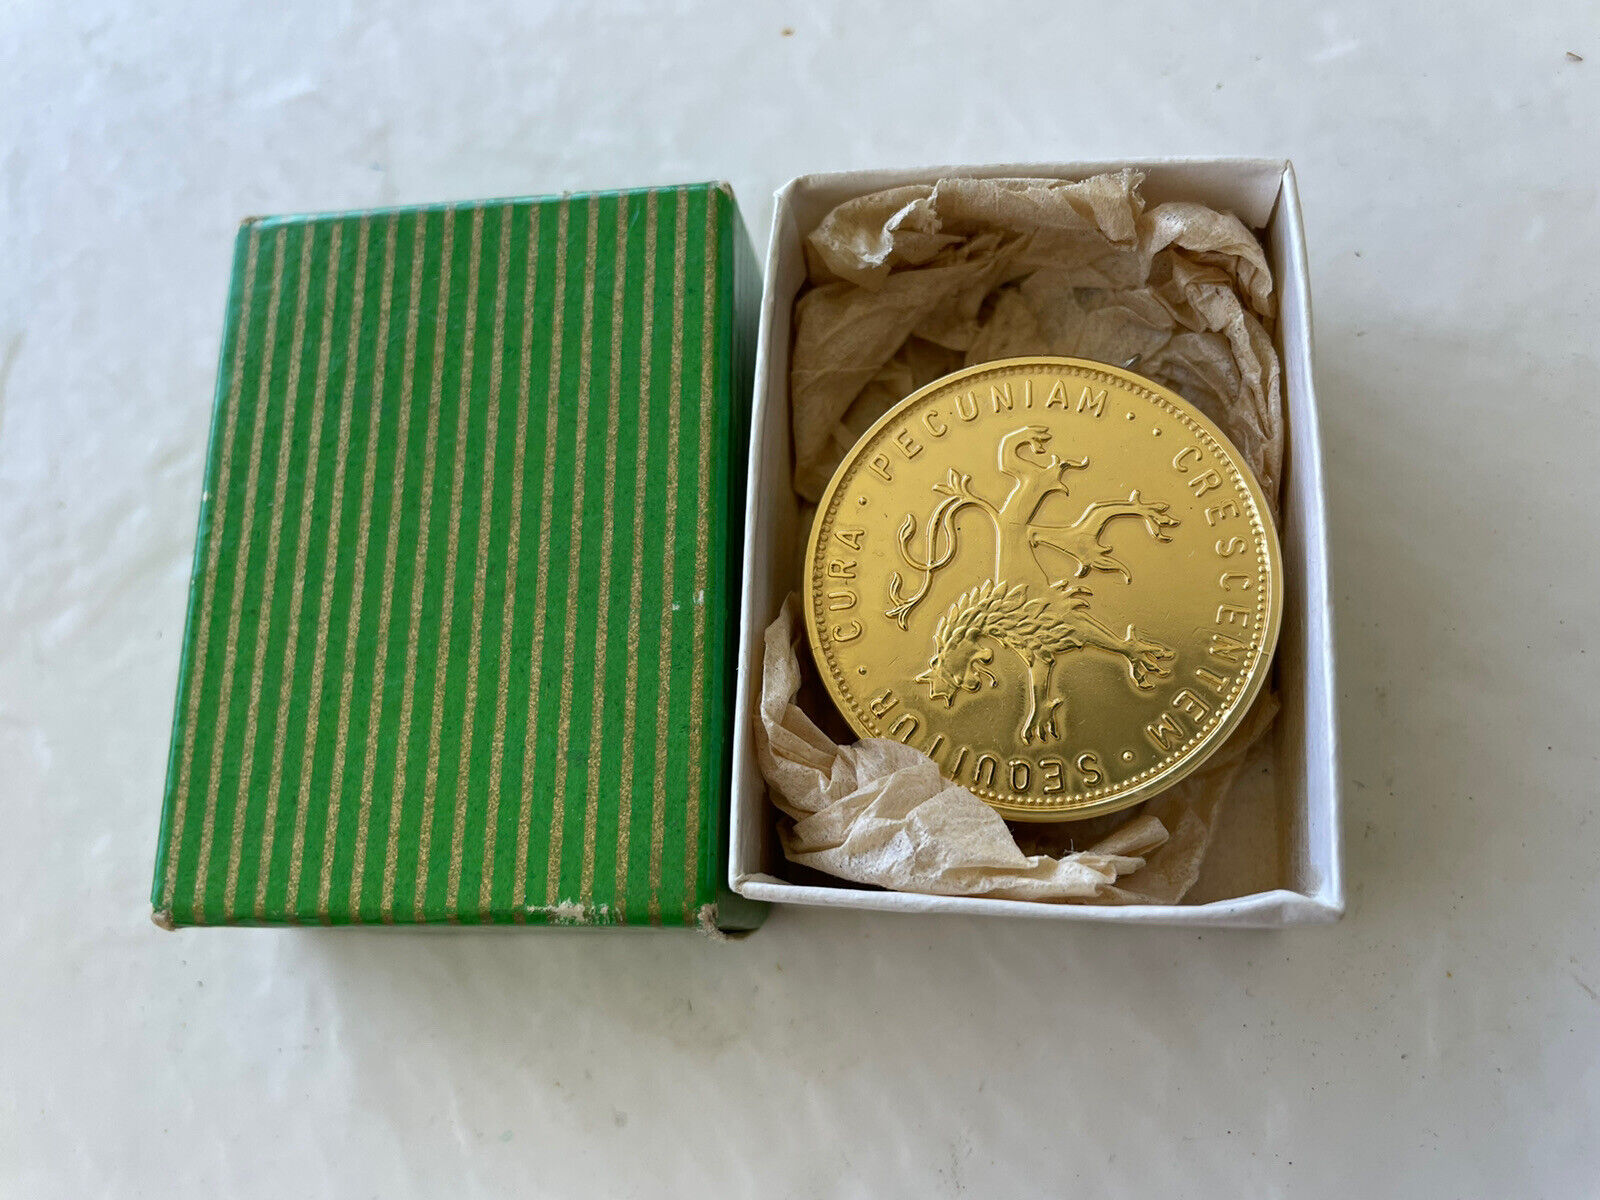 Germany Nobis Bene Nemini Sequitur Cura Latin Small Gold Tape Measure Mint